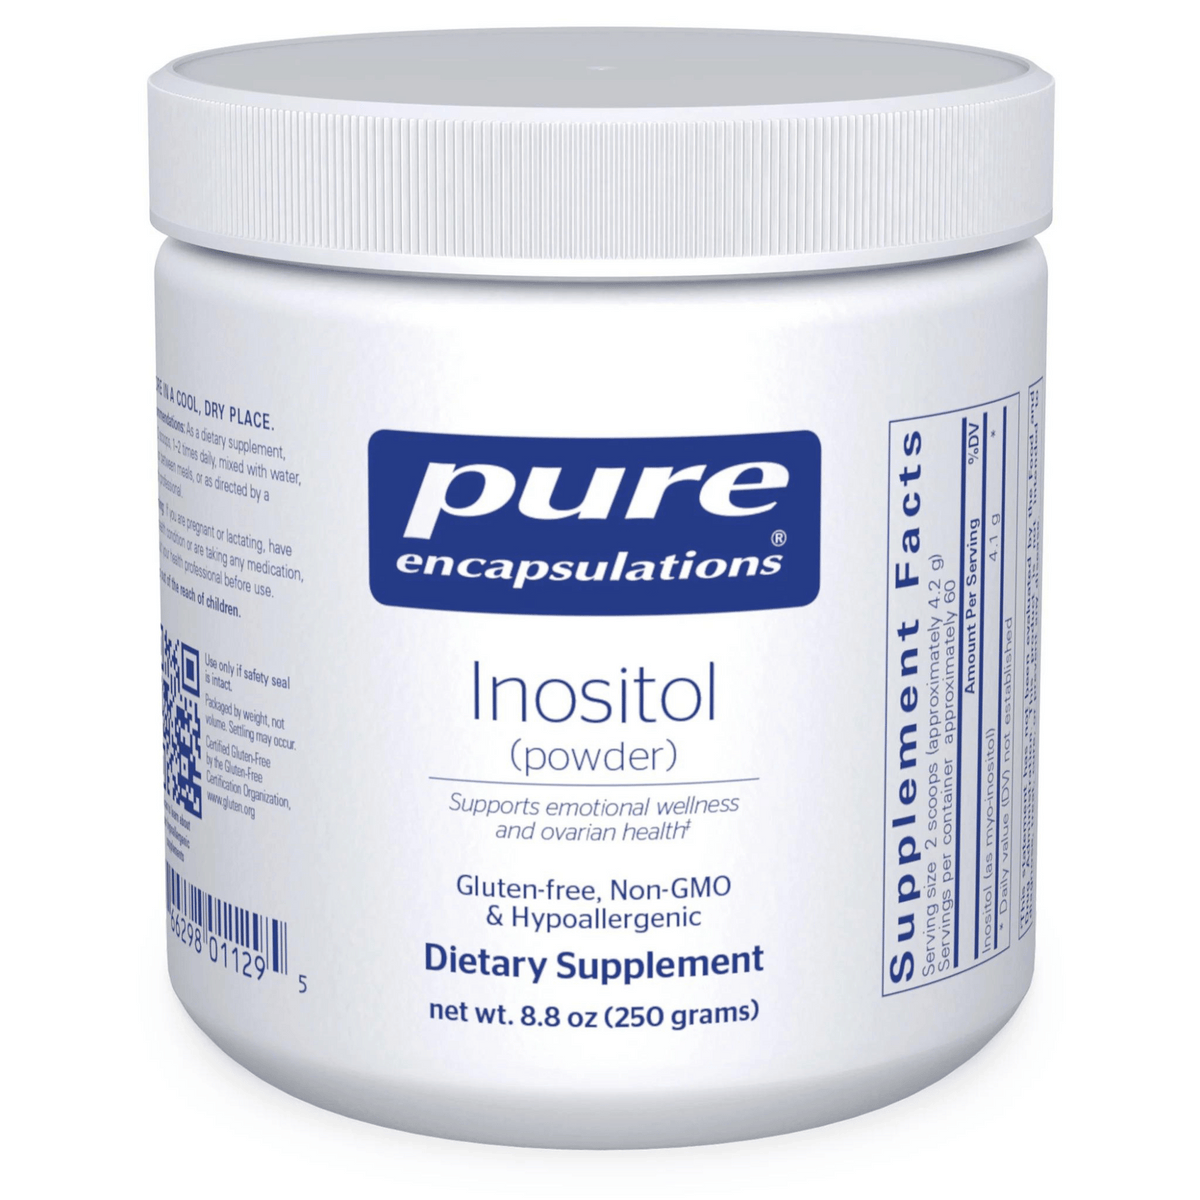 Primary Image of Inositol Powder